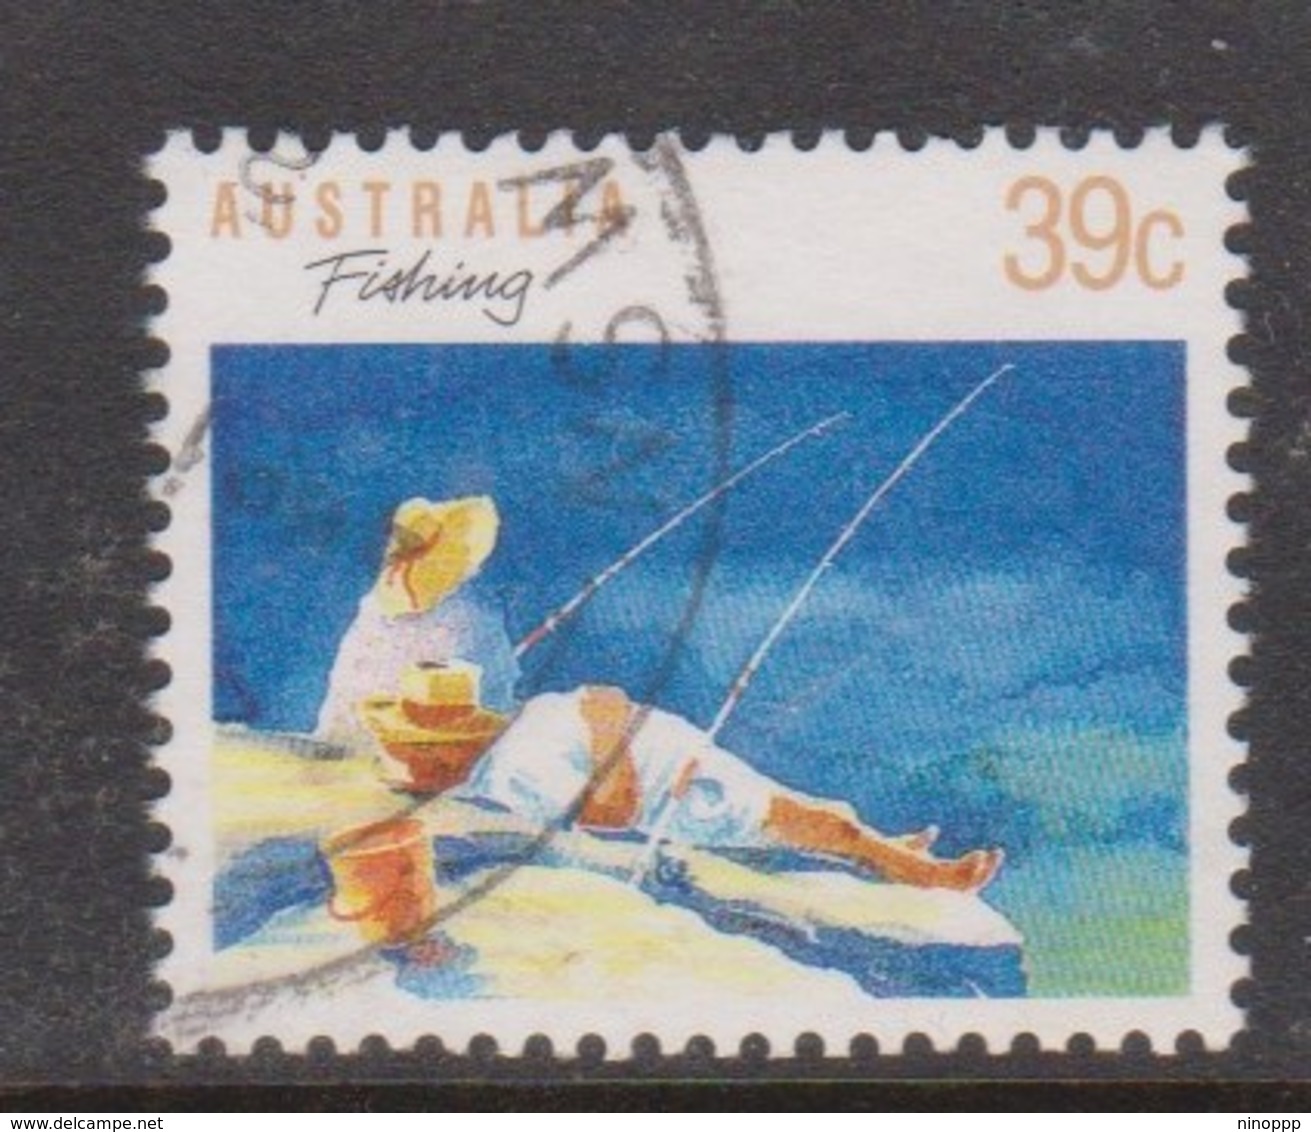 Australia ASC 1185 1989 Sports 39c Fishing Perf 13 X 13.5, Used - Essais & Réimpressions